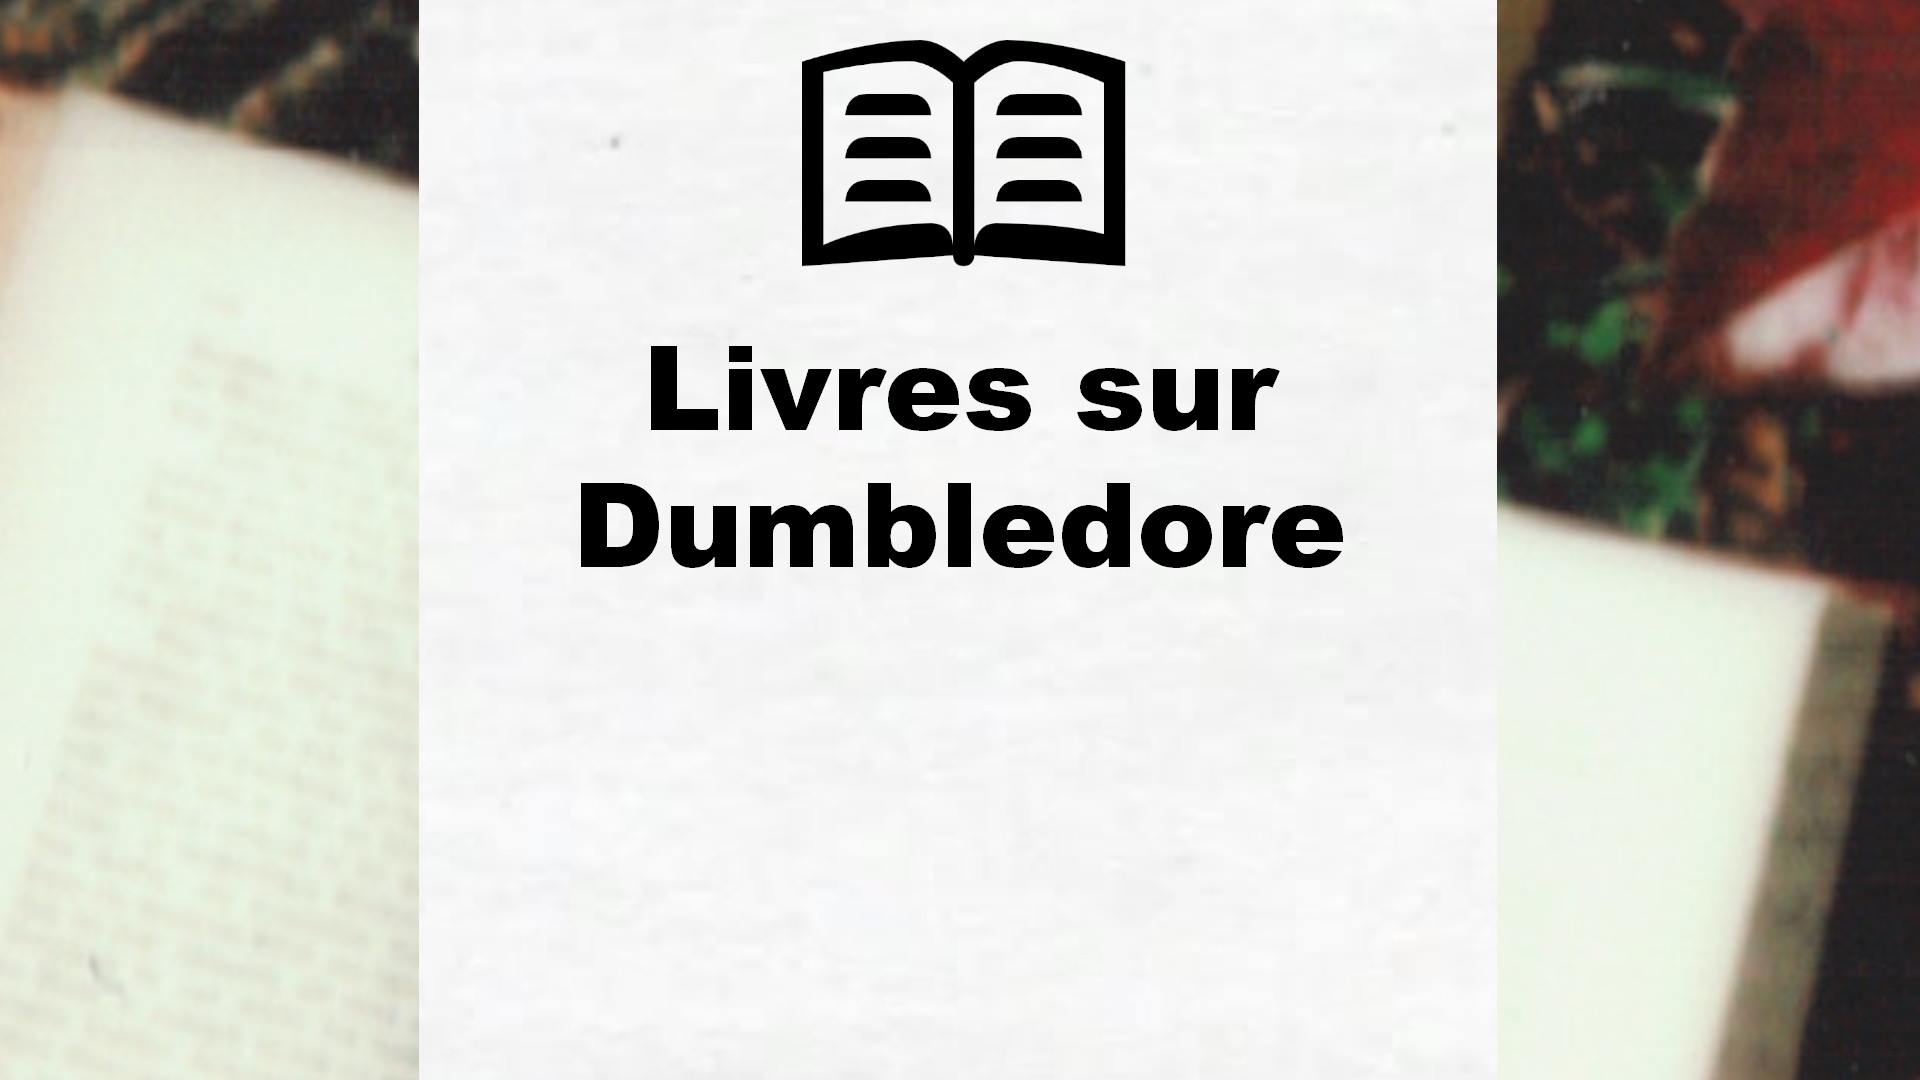 Livres sur Dumbledore